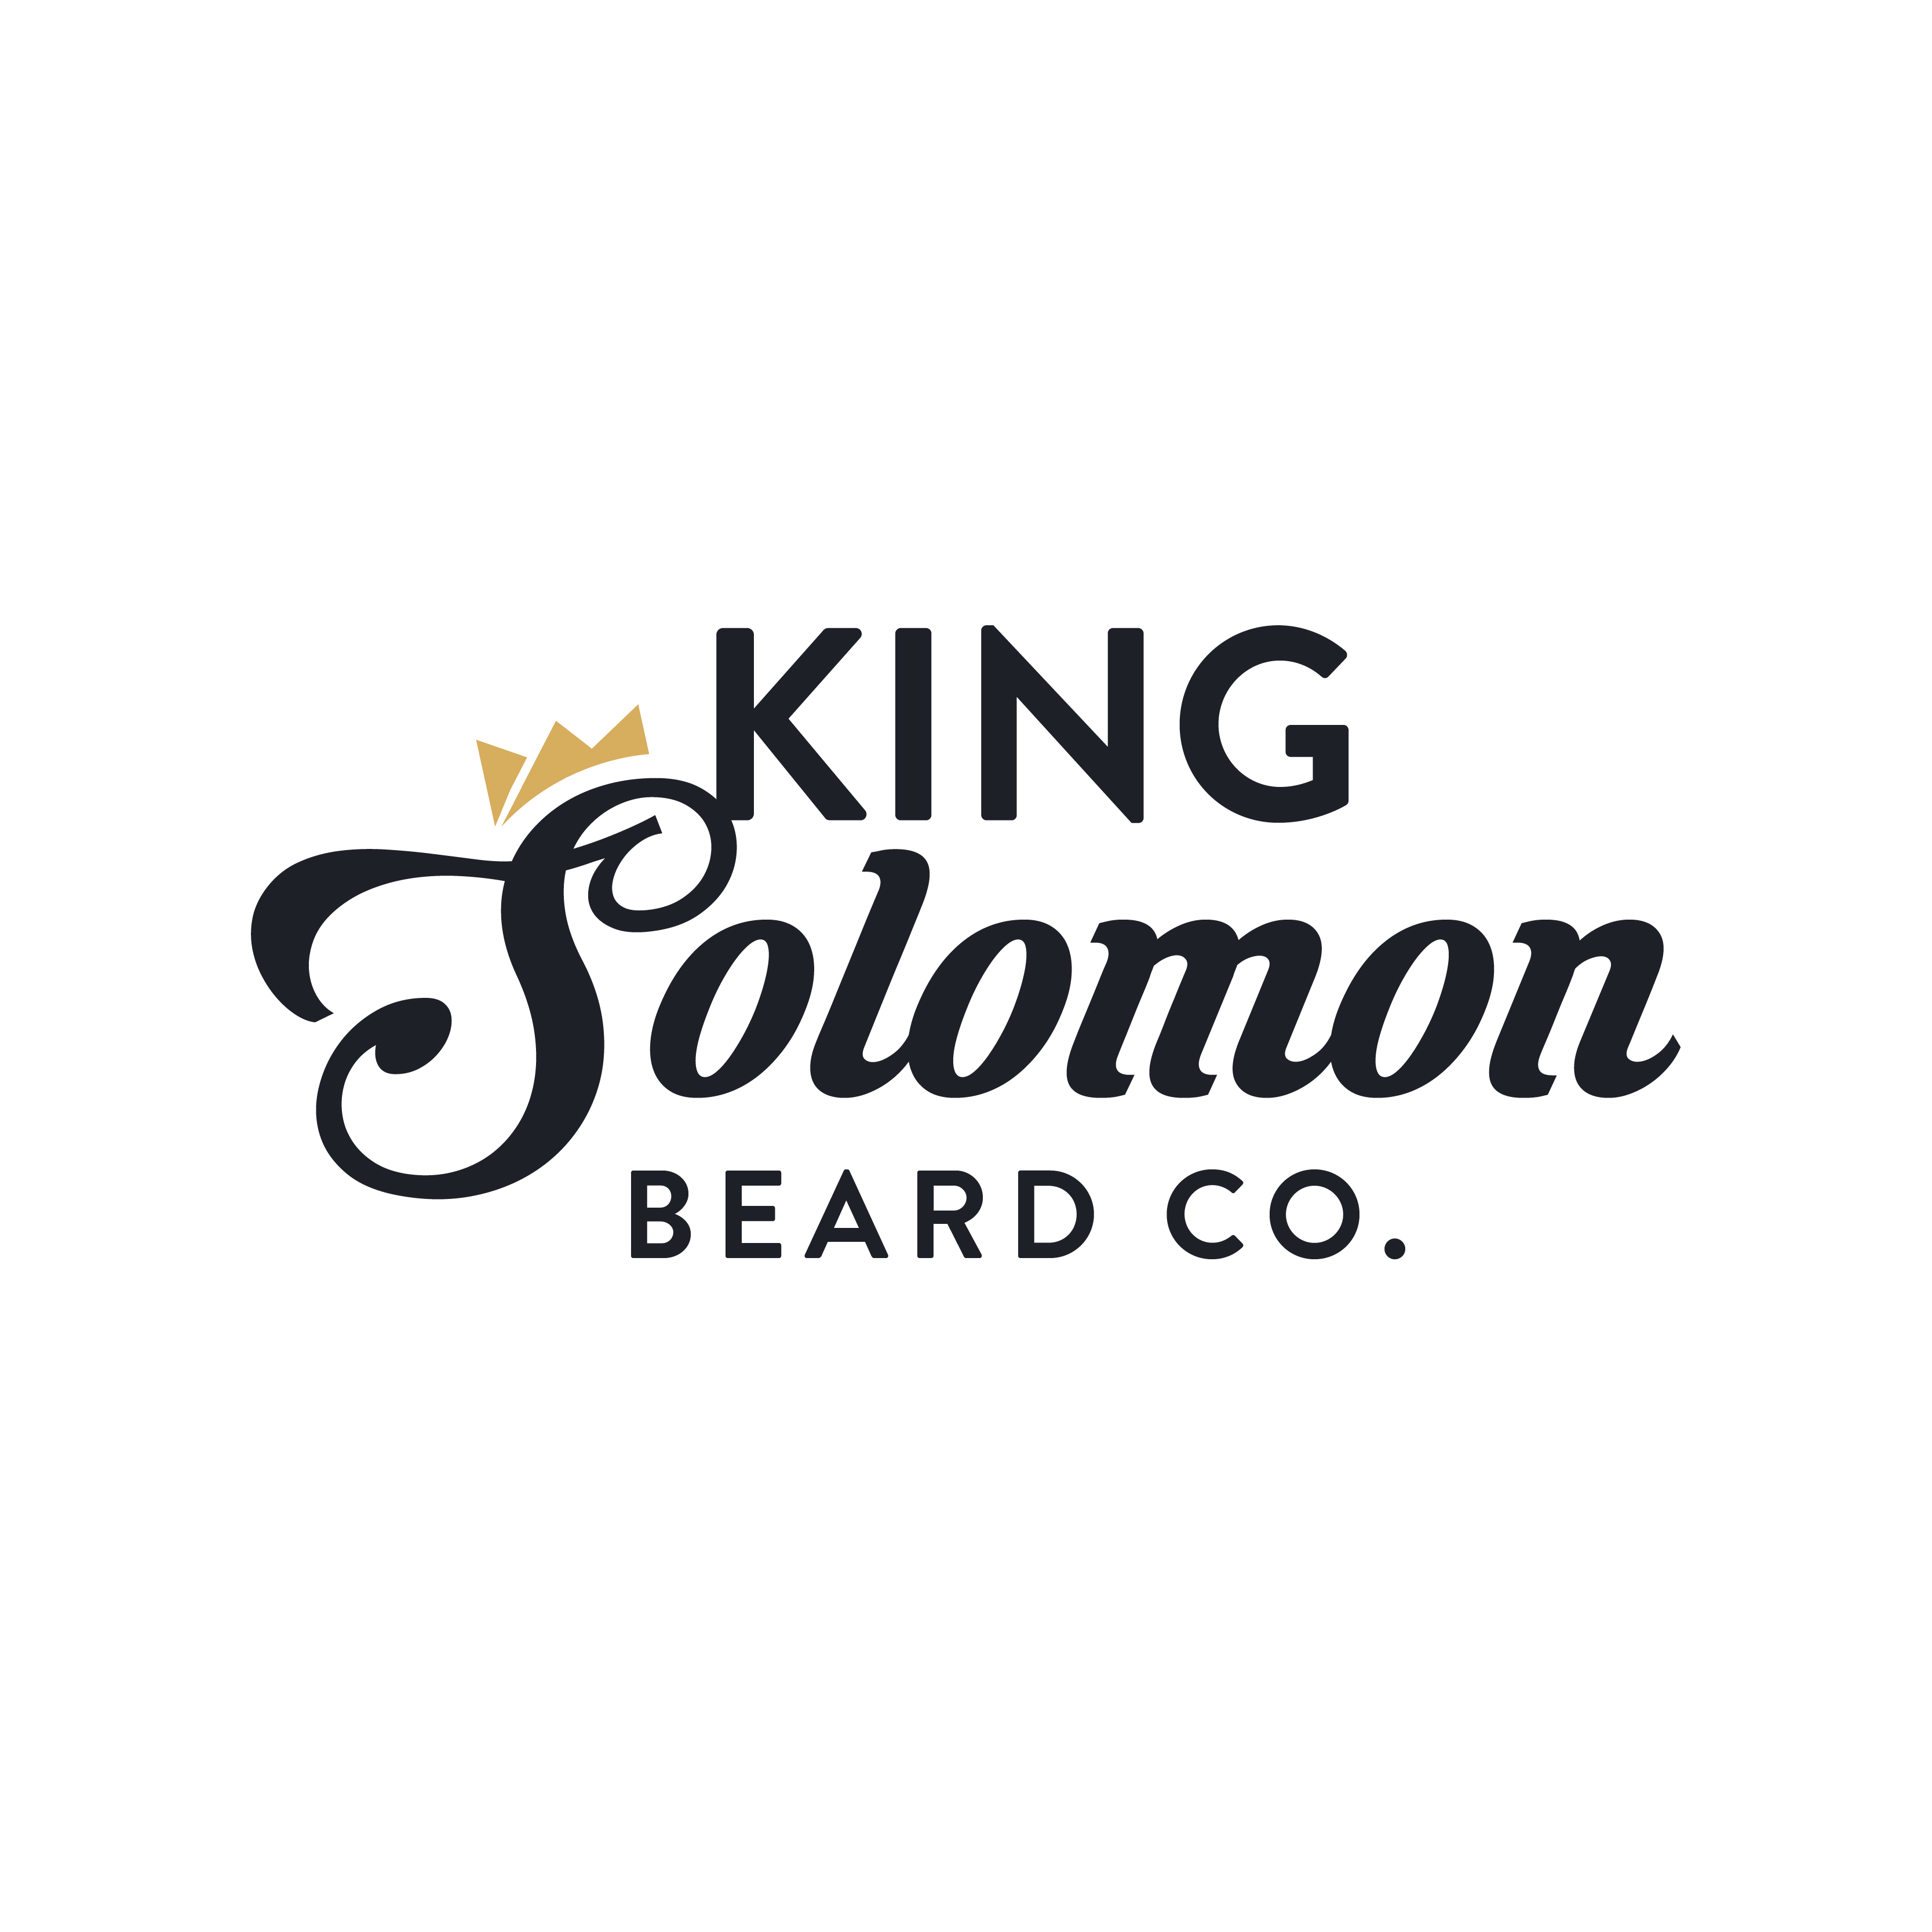 King Solomon Logo logo design by logo designer Rippke Design for your inspiration and for the worlds largest logo competition